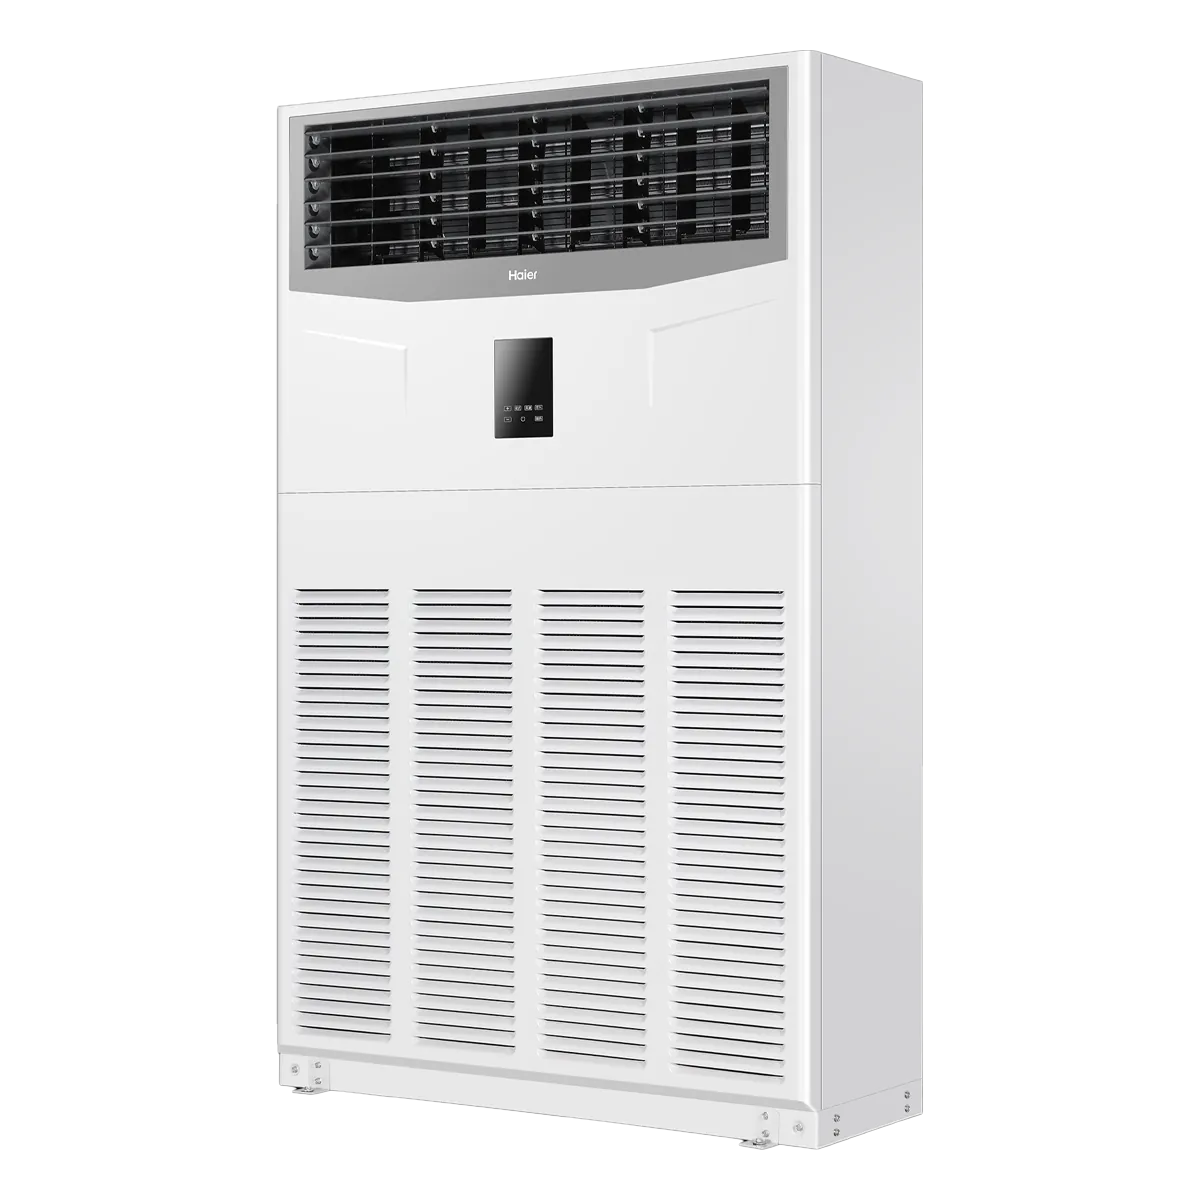 air-conditioner-csu-technology-co-ltd